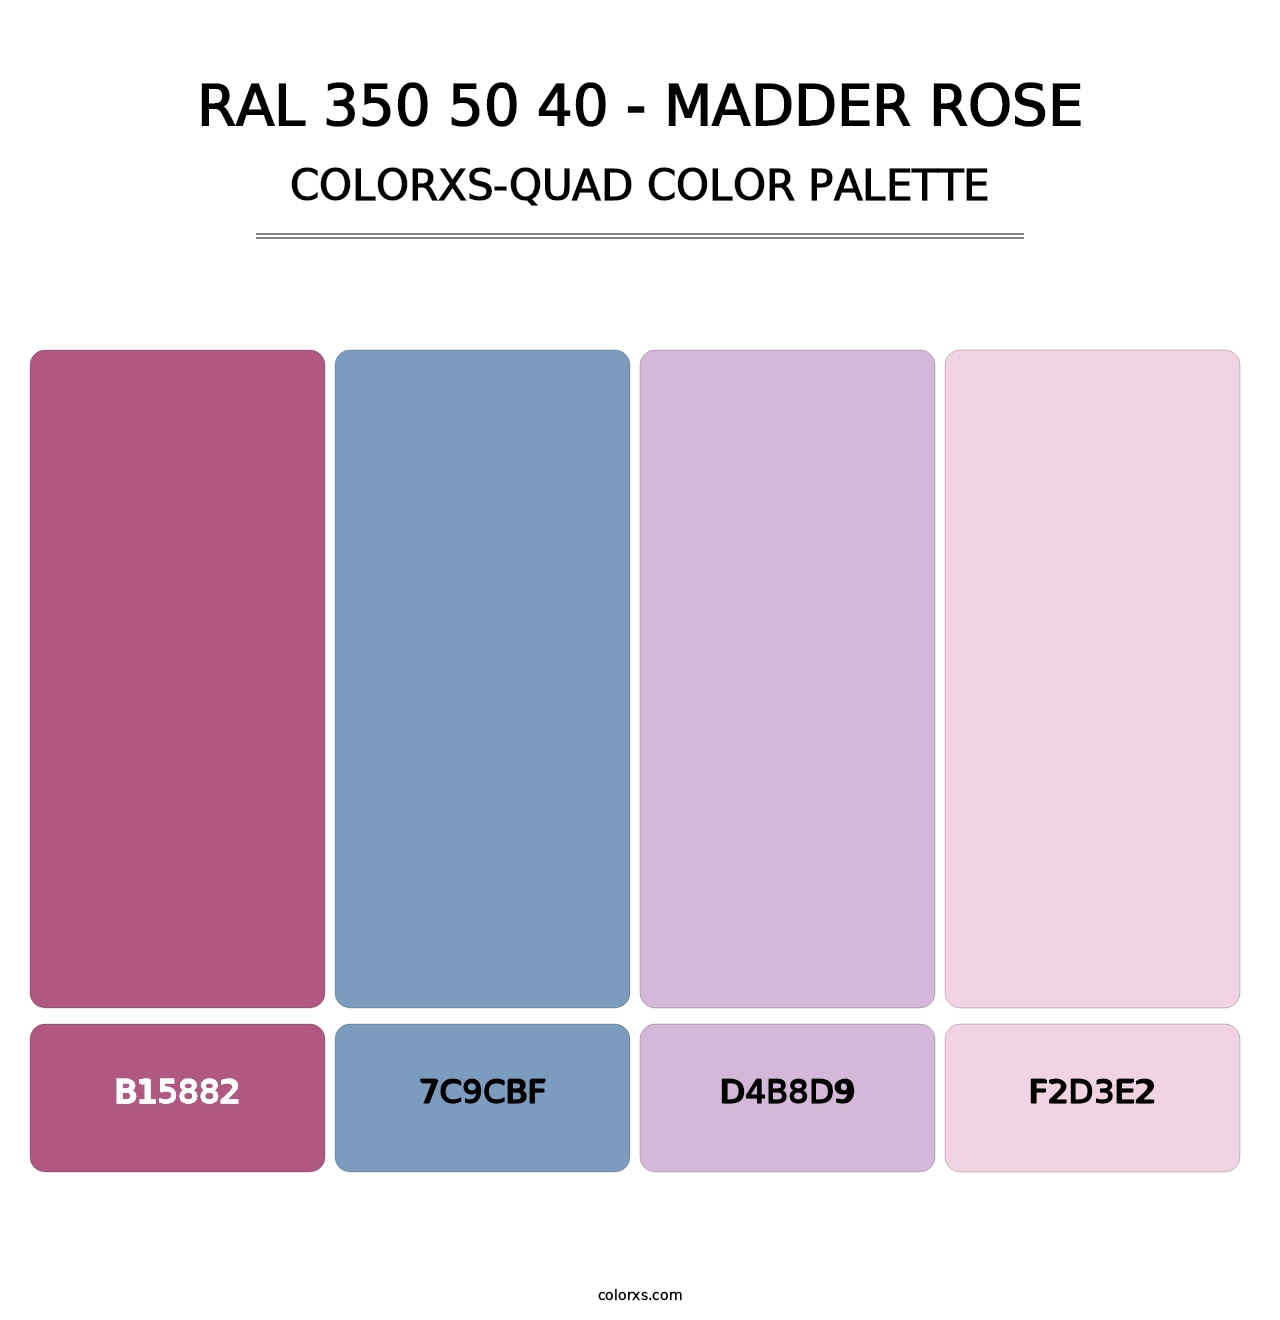 RAL 350 50 40 - Madder Rose - Colorxs Quad Palette